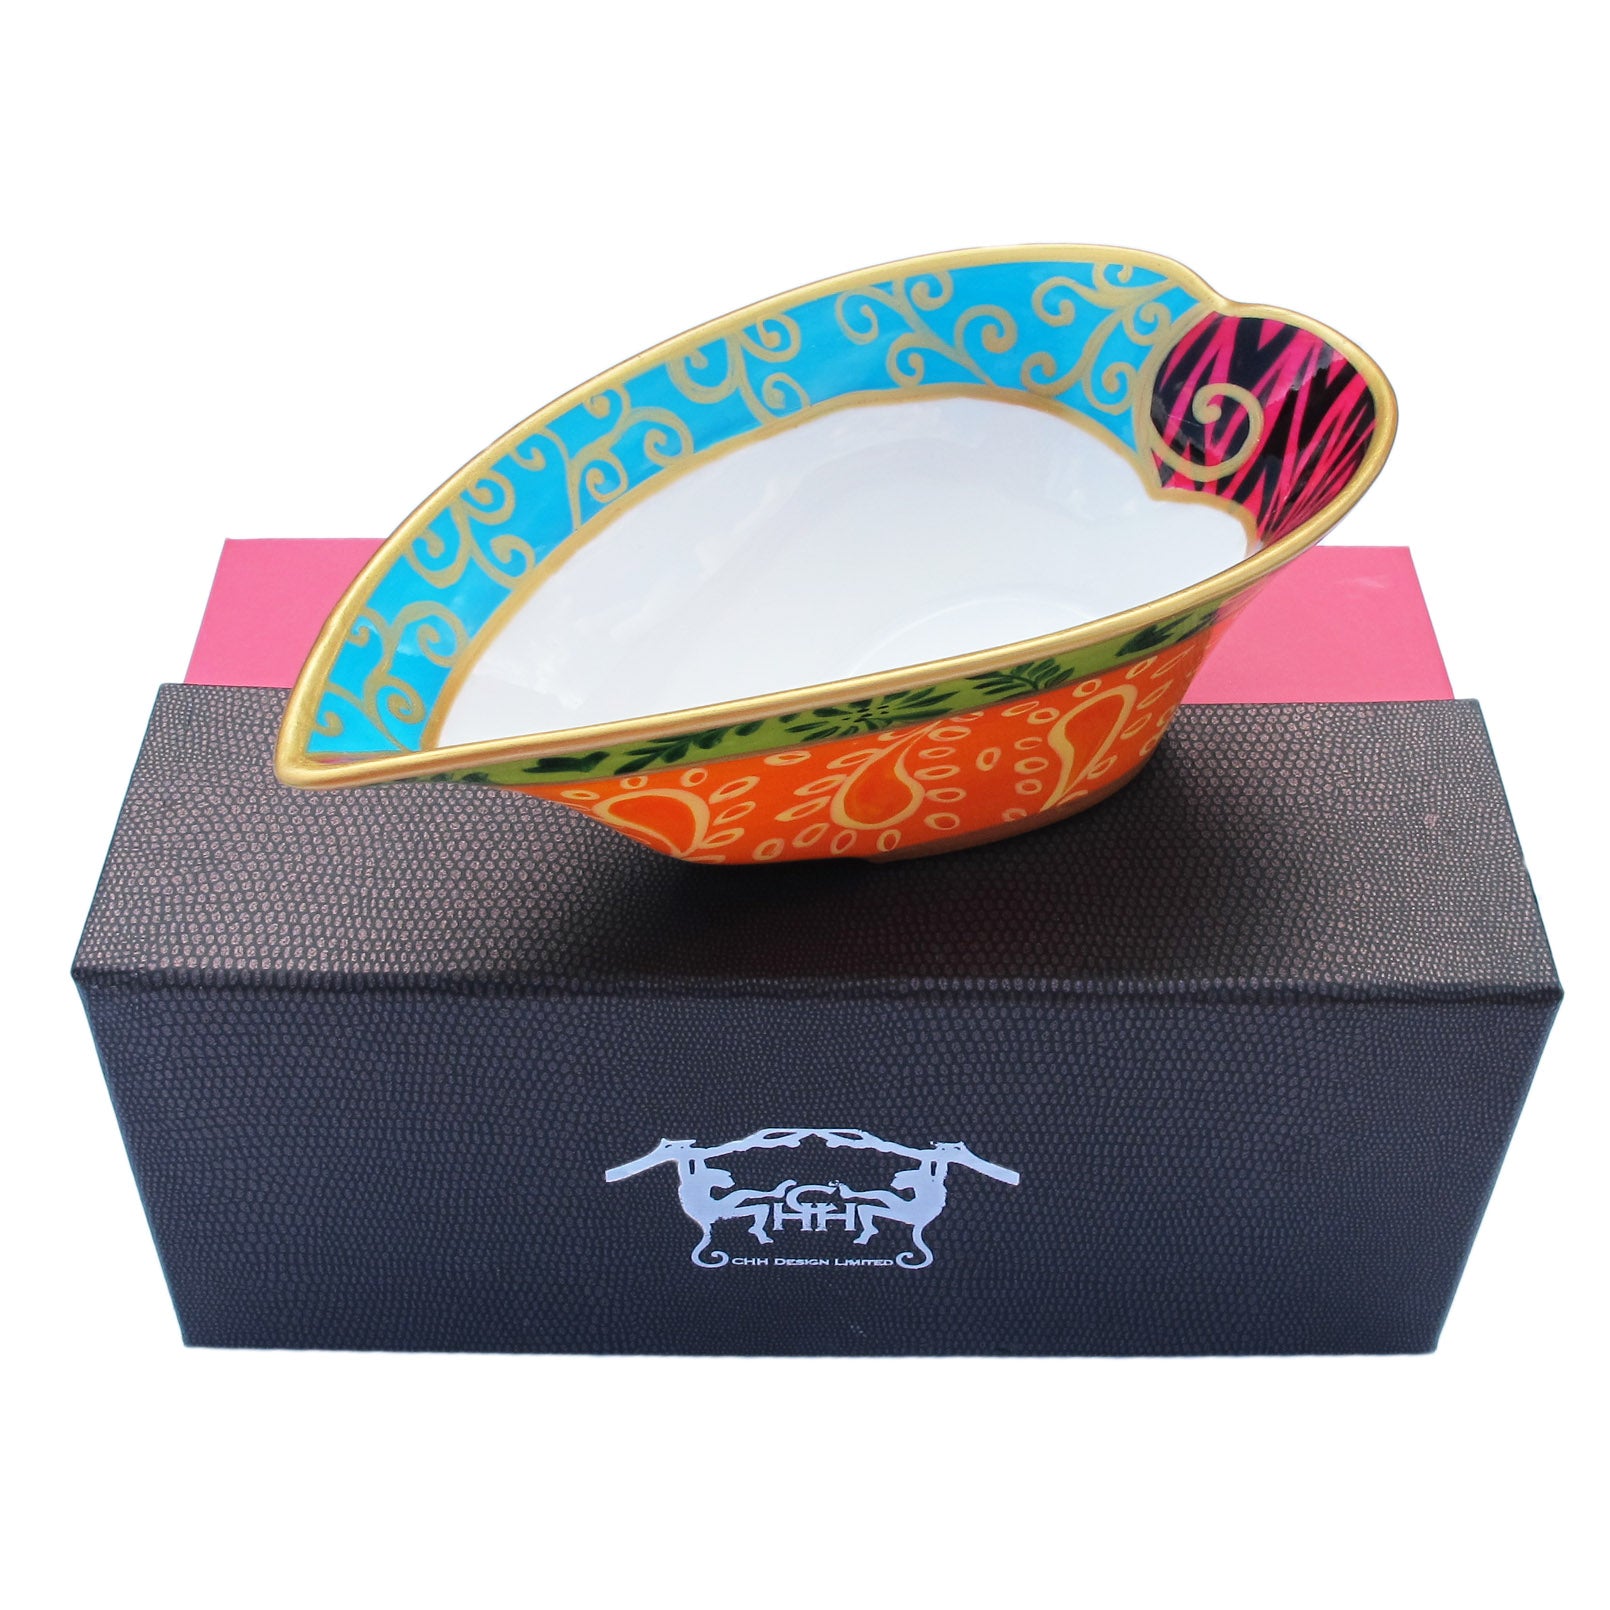 Heart Shaped Bowl - Hand Painted Bone China, gift boxed - HAPPY